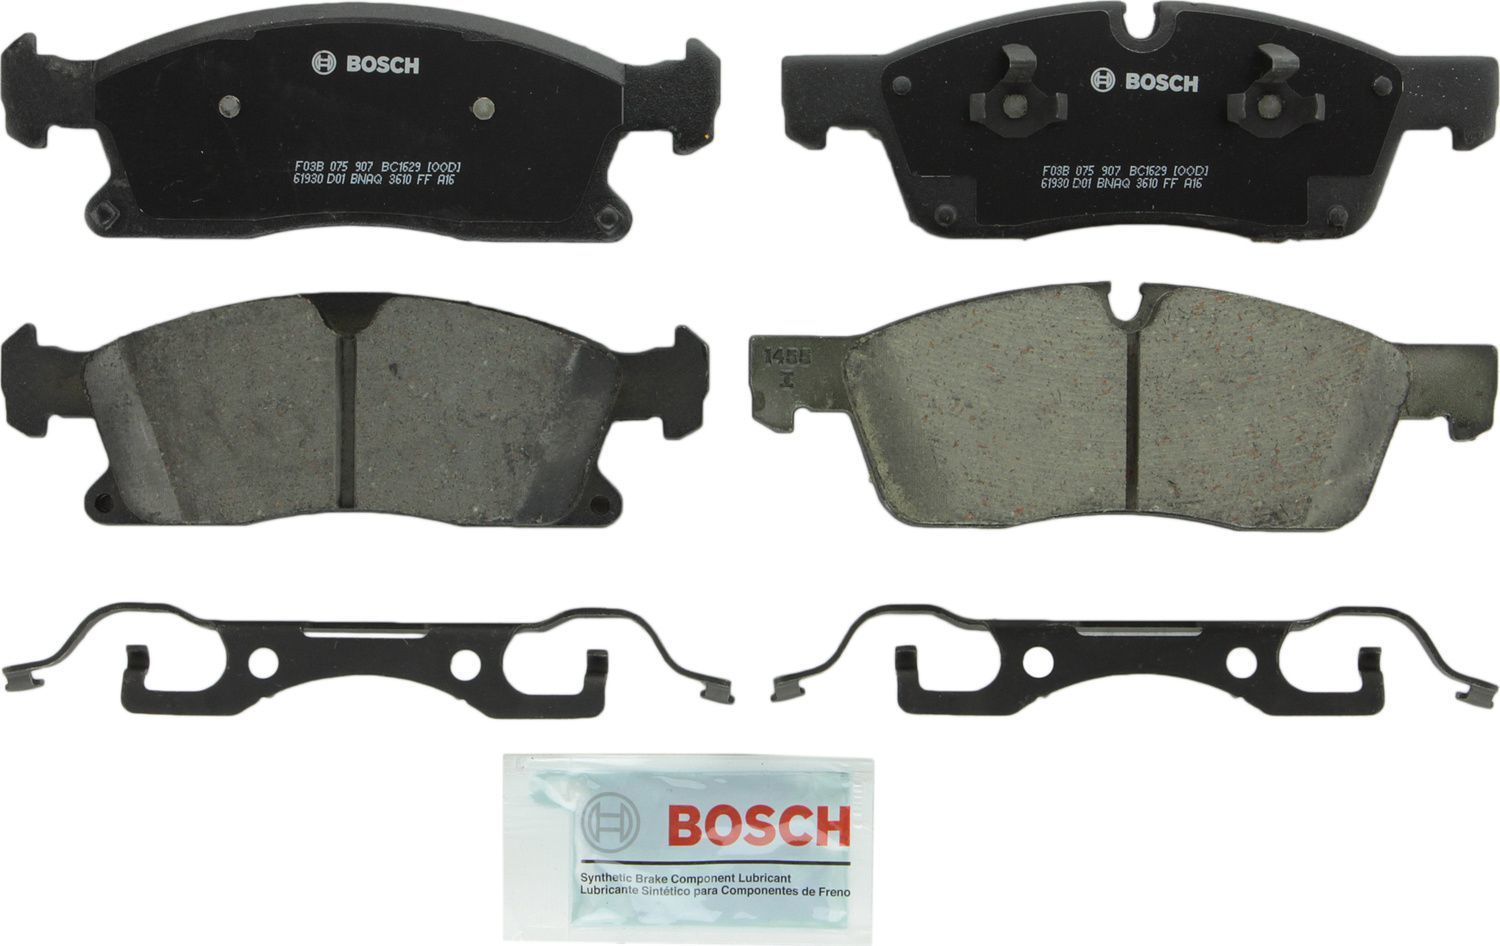 BOSCH BRAKE - Bosch QuietCast Brake Pad Ceramic Brake Pads (Front) - BQC BC1629